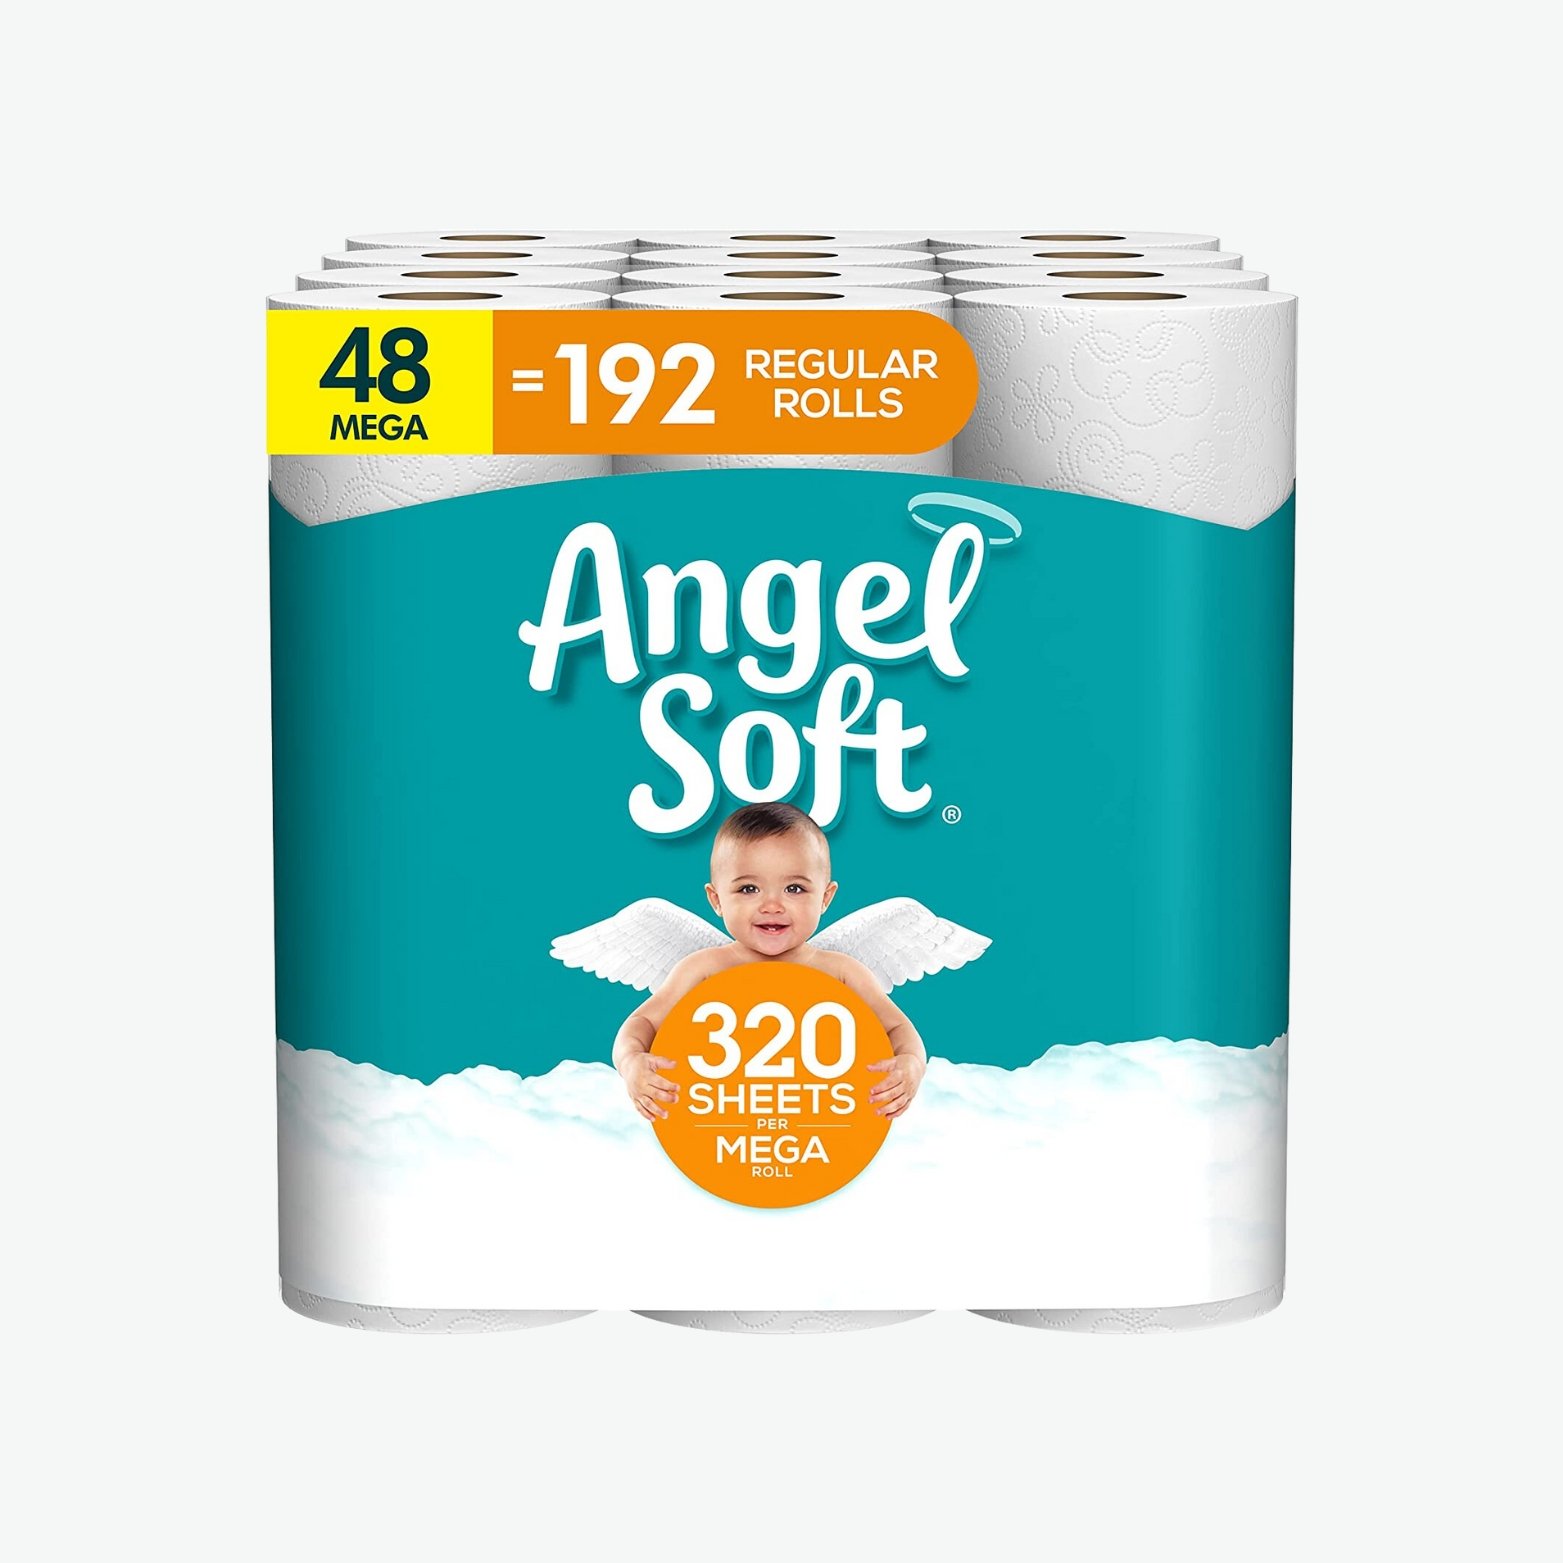 Angel Soft Toilet Paper Pack.jpg